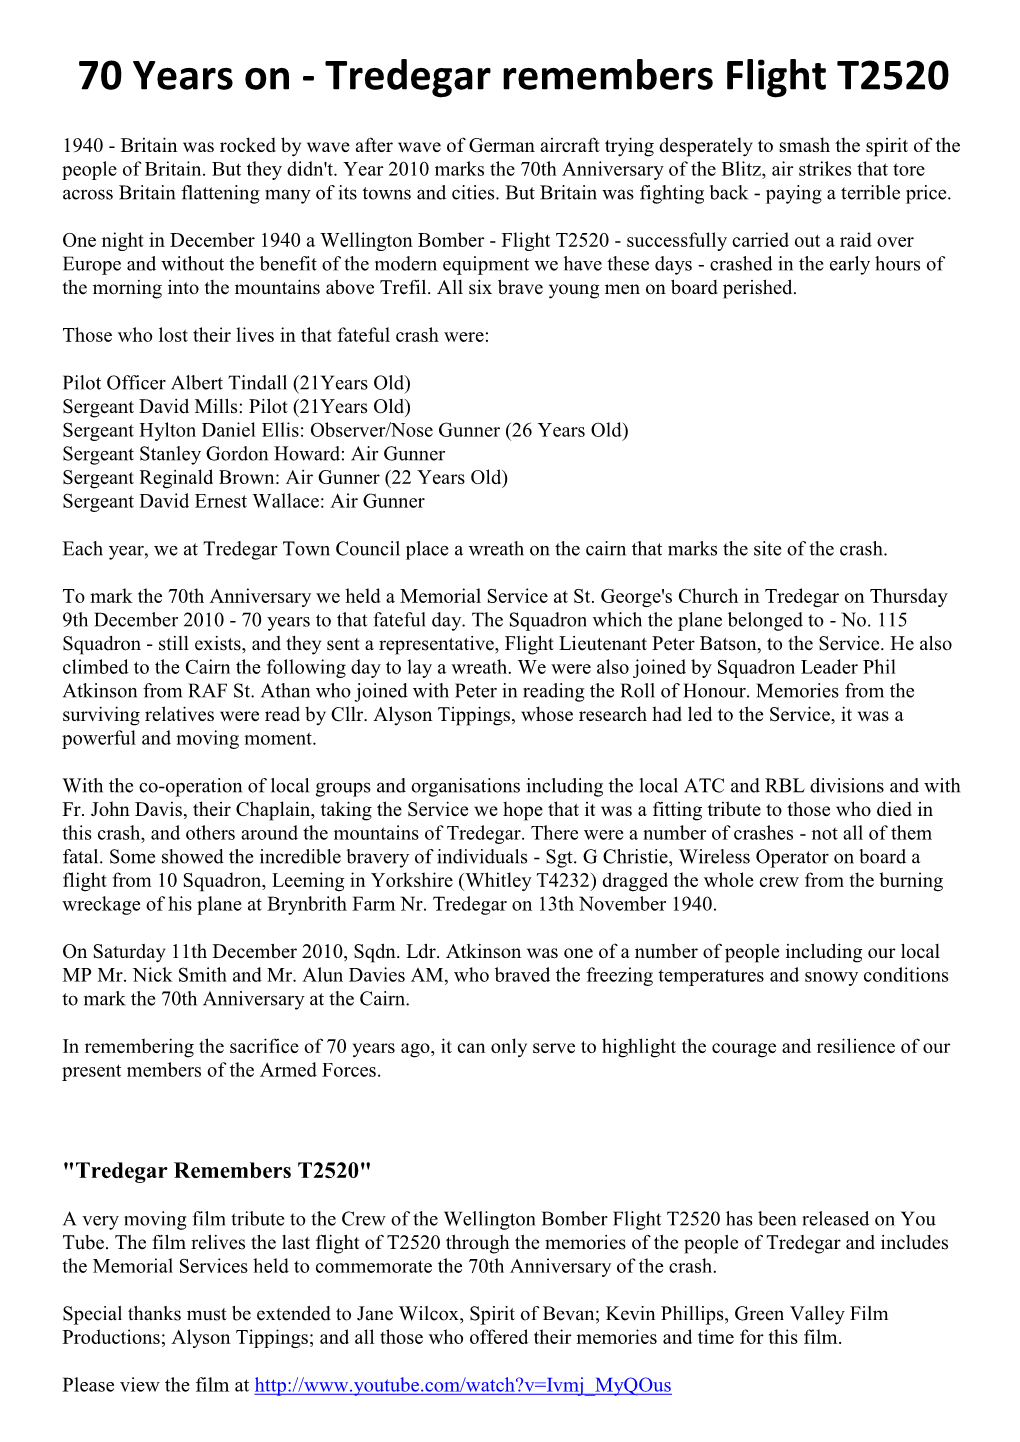 70 Years on - Tredegar Remembers Flight T2520